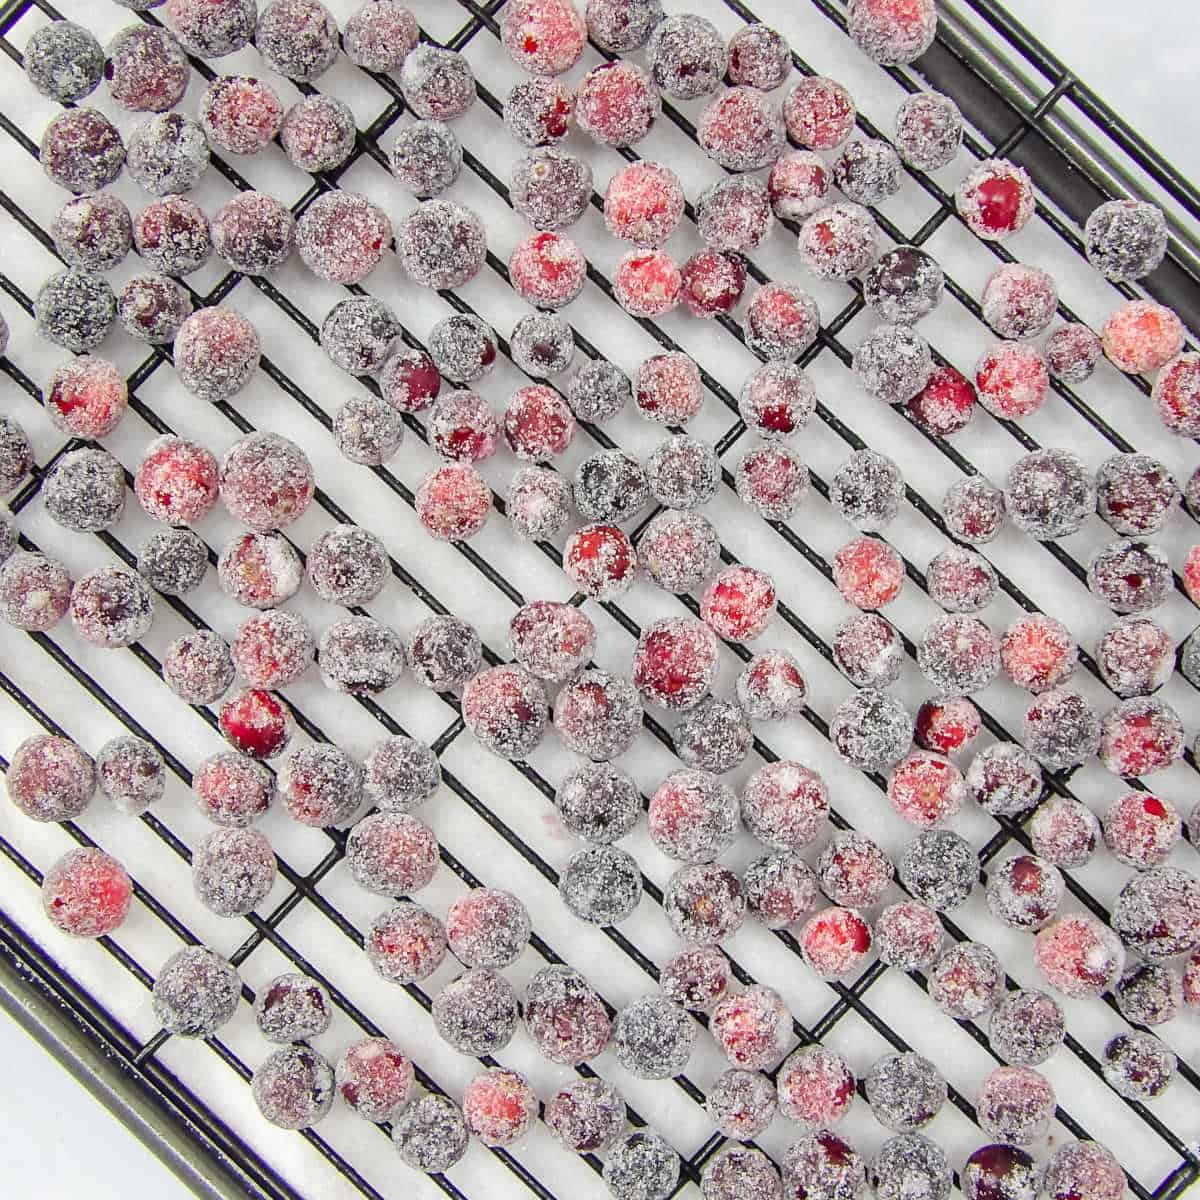 Sugar coated cranberries drying on a black metal rack.